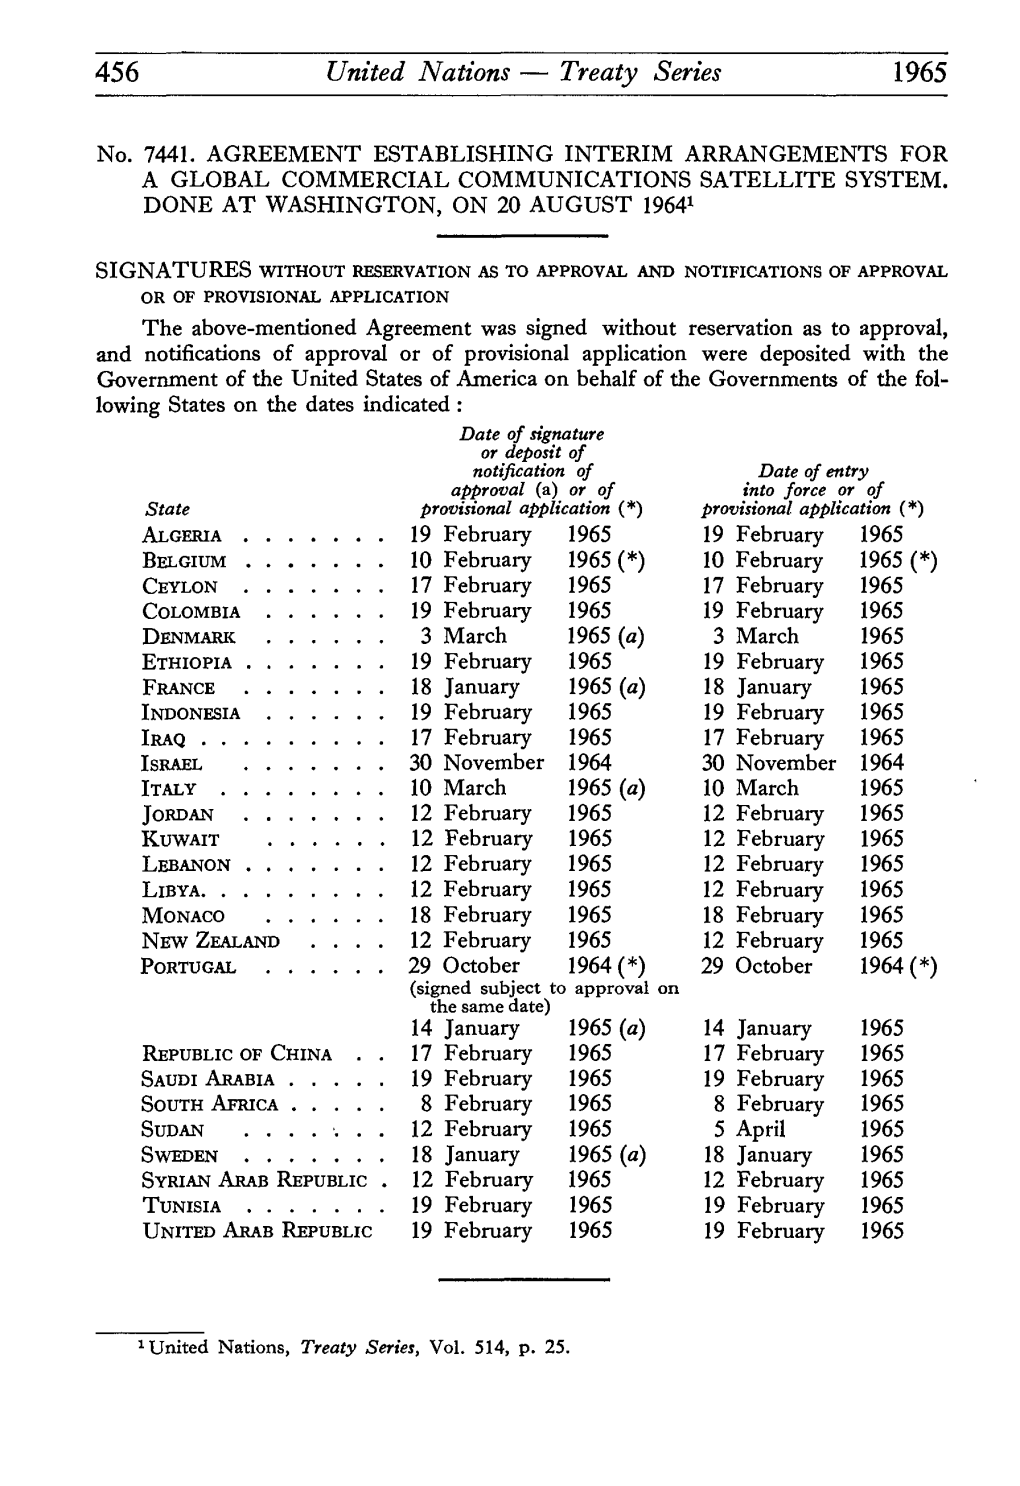 United Nations Treaty Series 1965